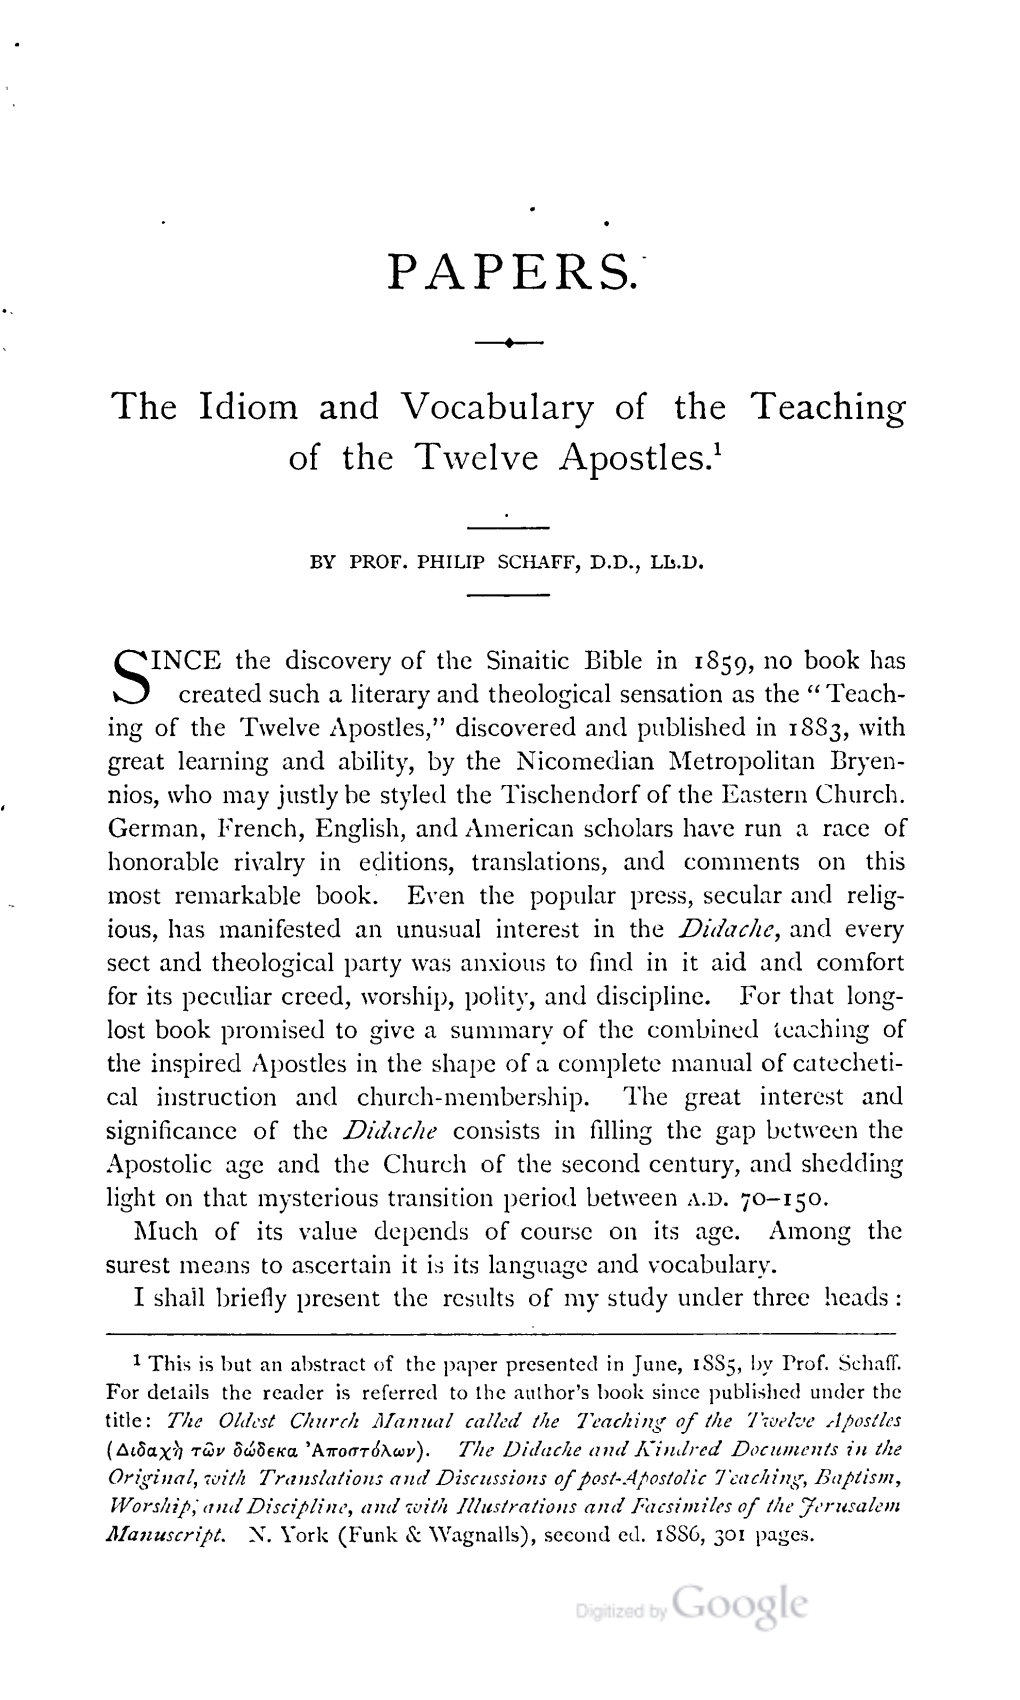 Philip Schaff, "The Idiom and Vocabulary